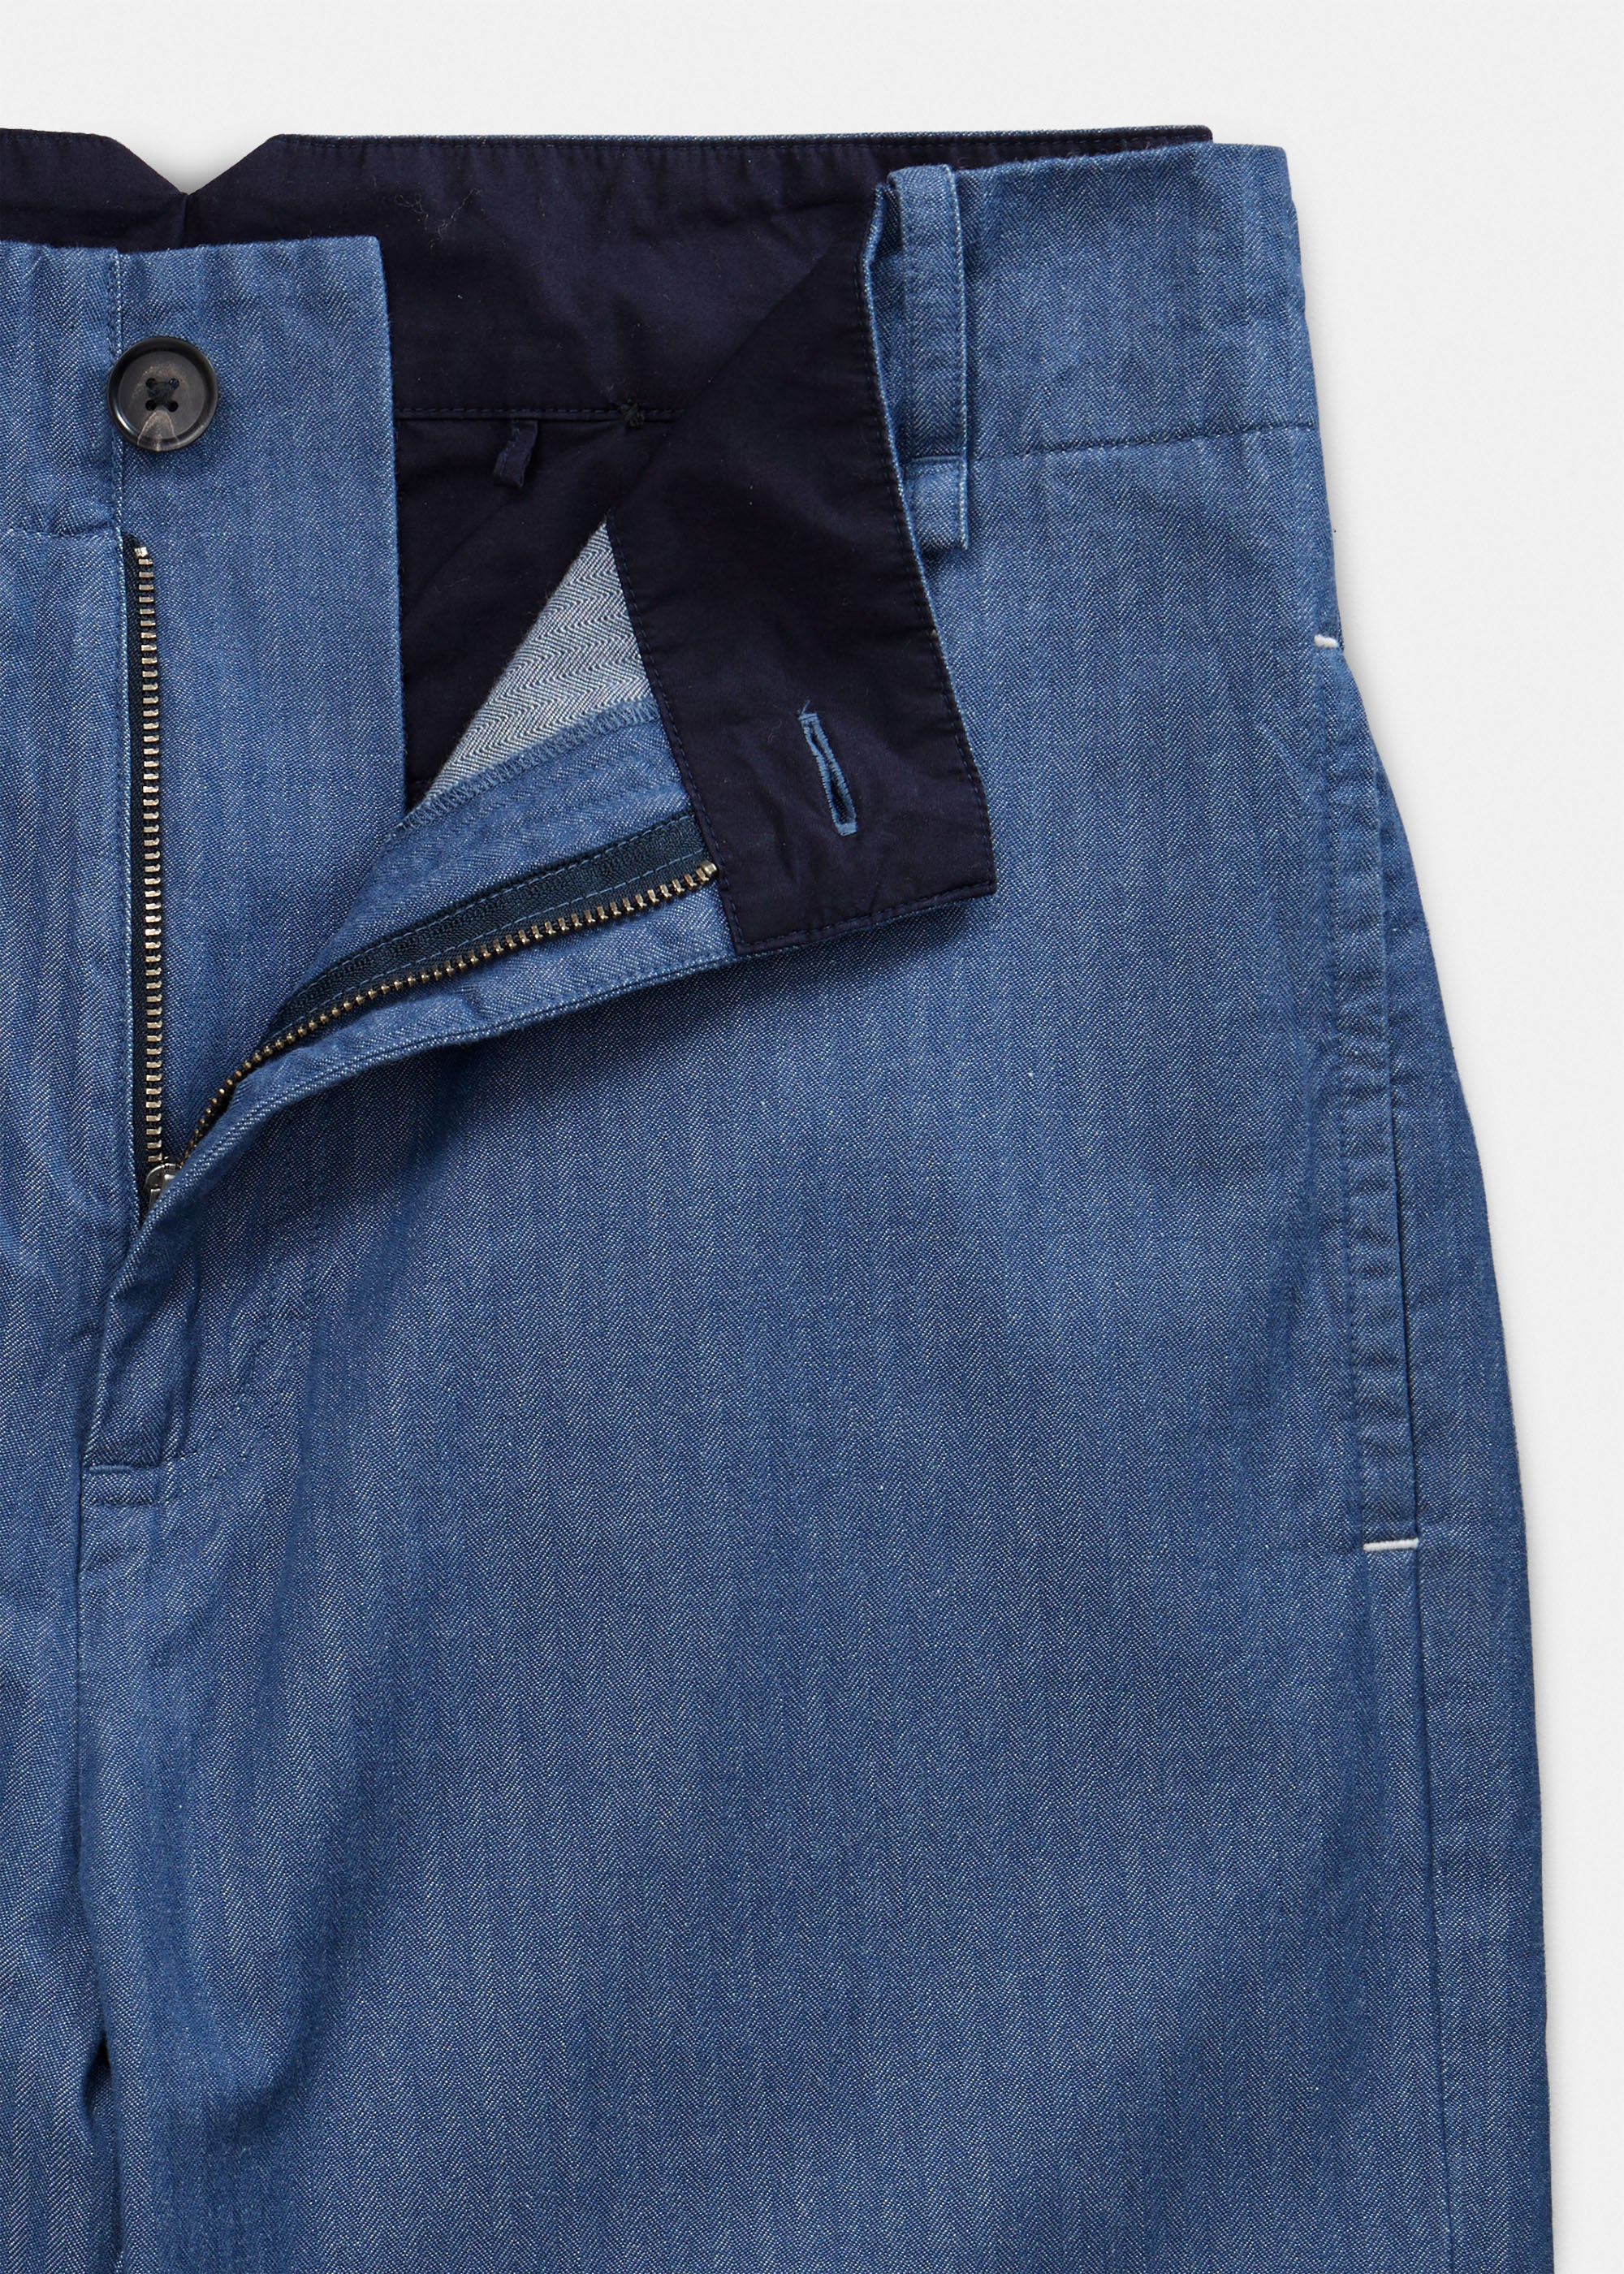 Willa pant herringbone | Blue Jeans